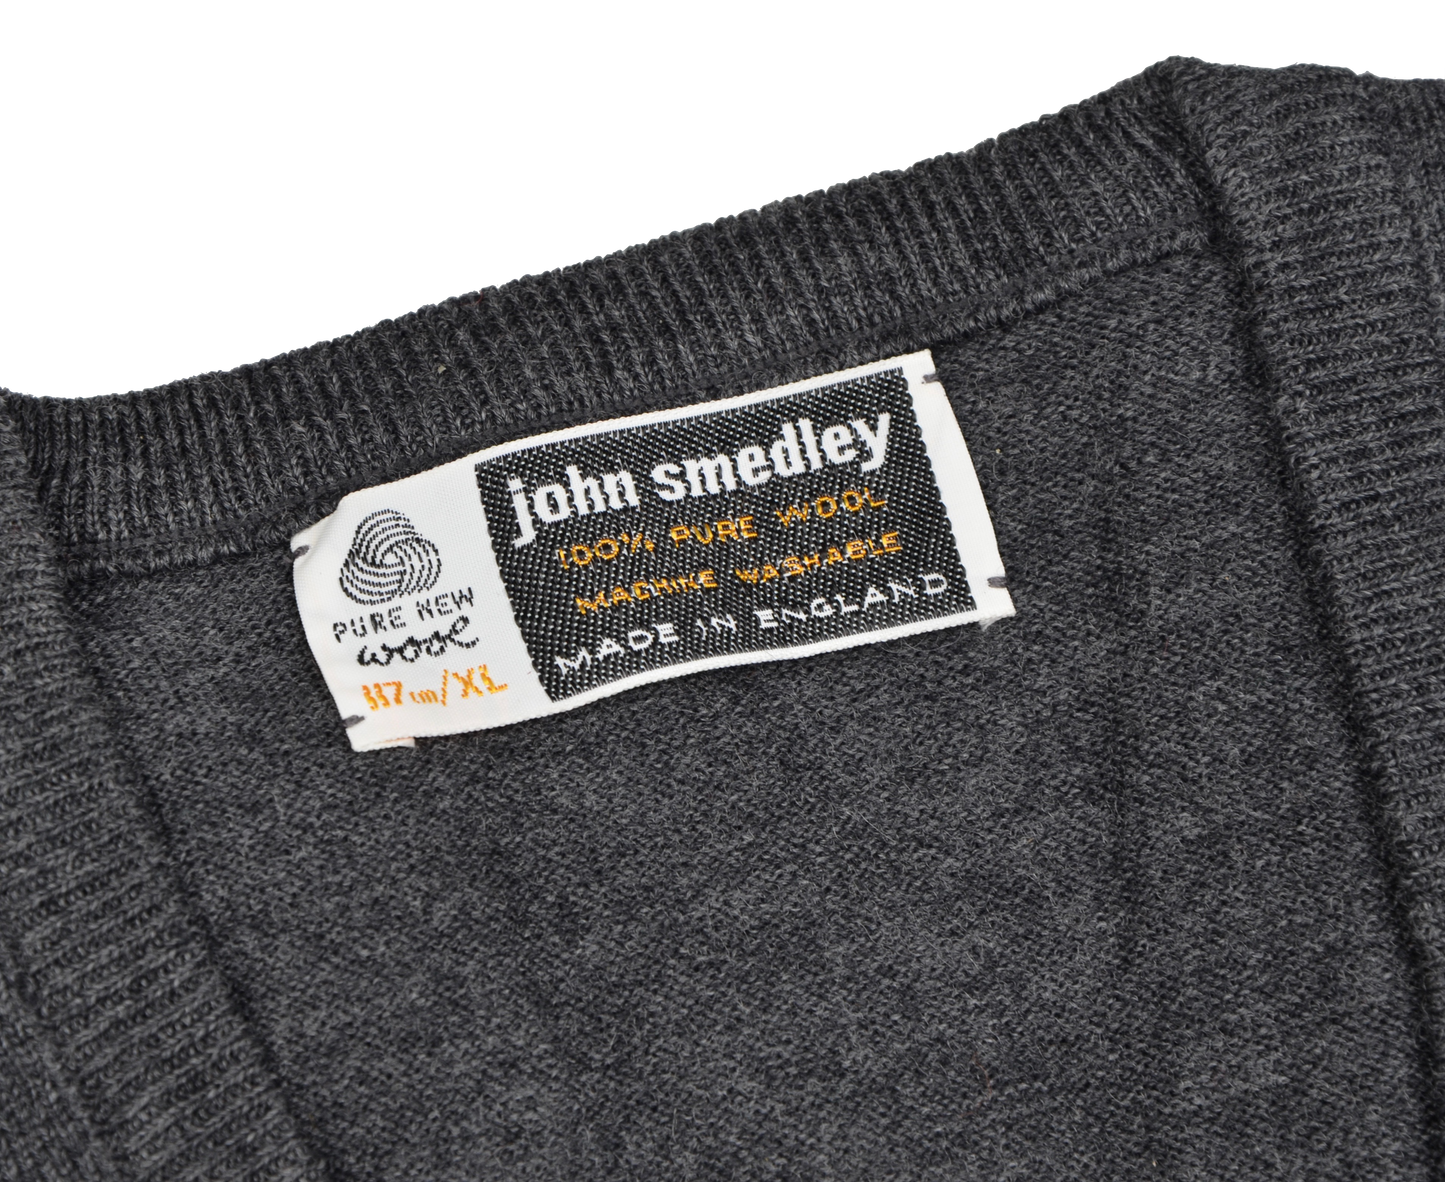 John Smedley of England Sweater Vest Size XL  - Grey